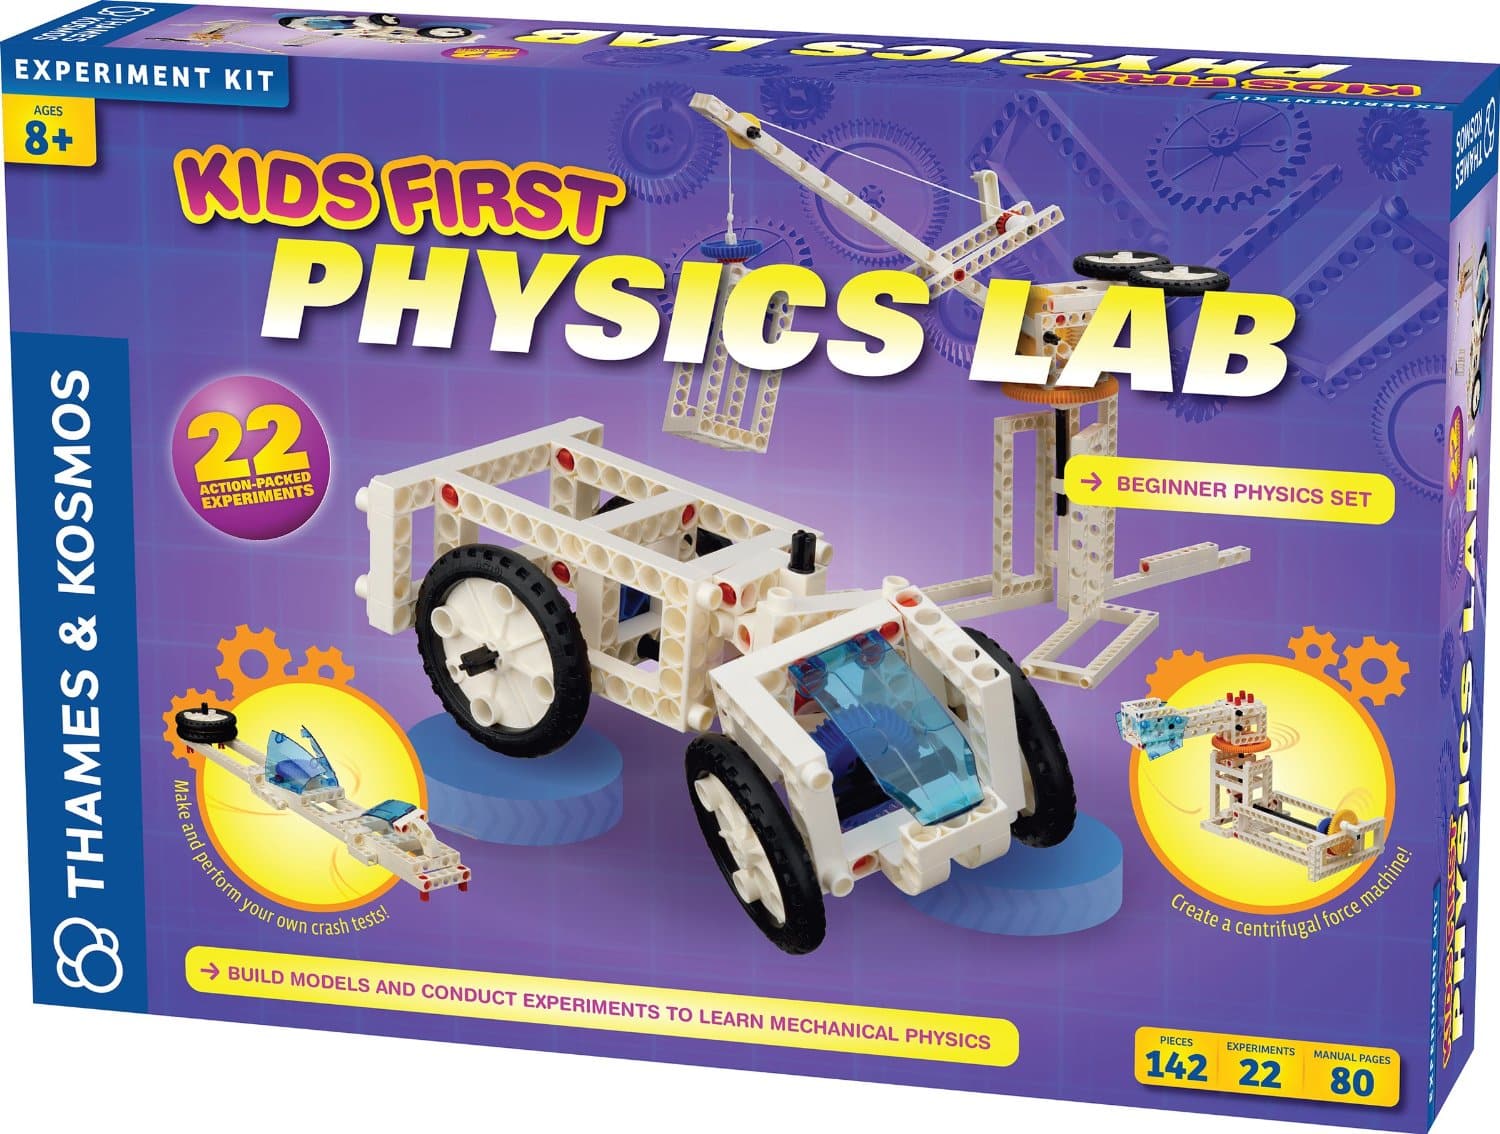 DEAL ALERT: Kids First Physics Lab Kit 32% off